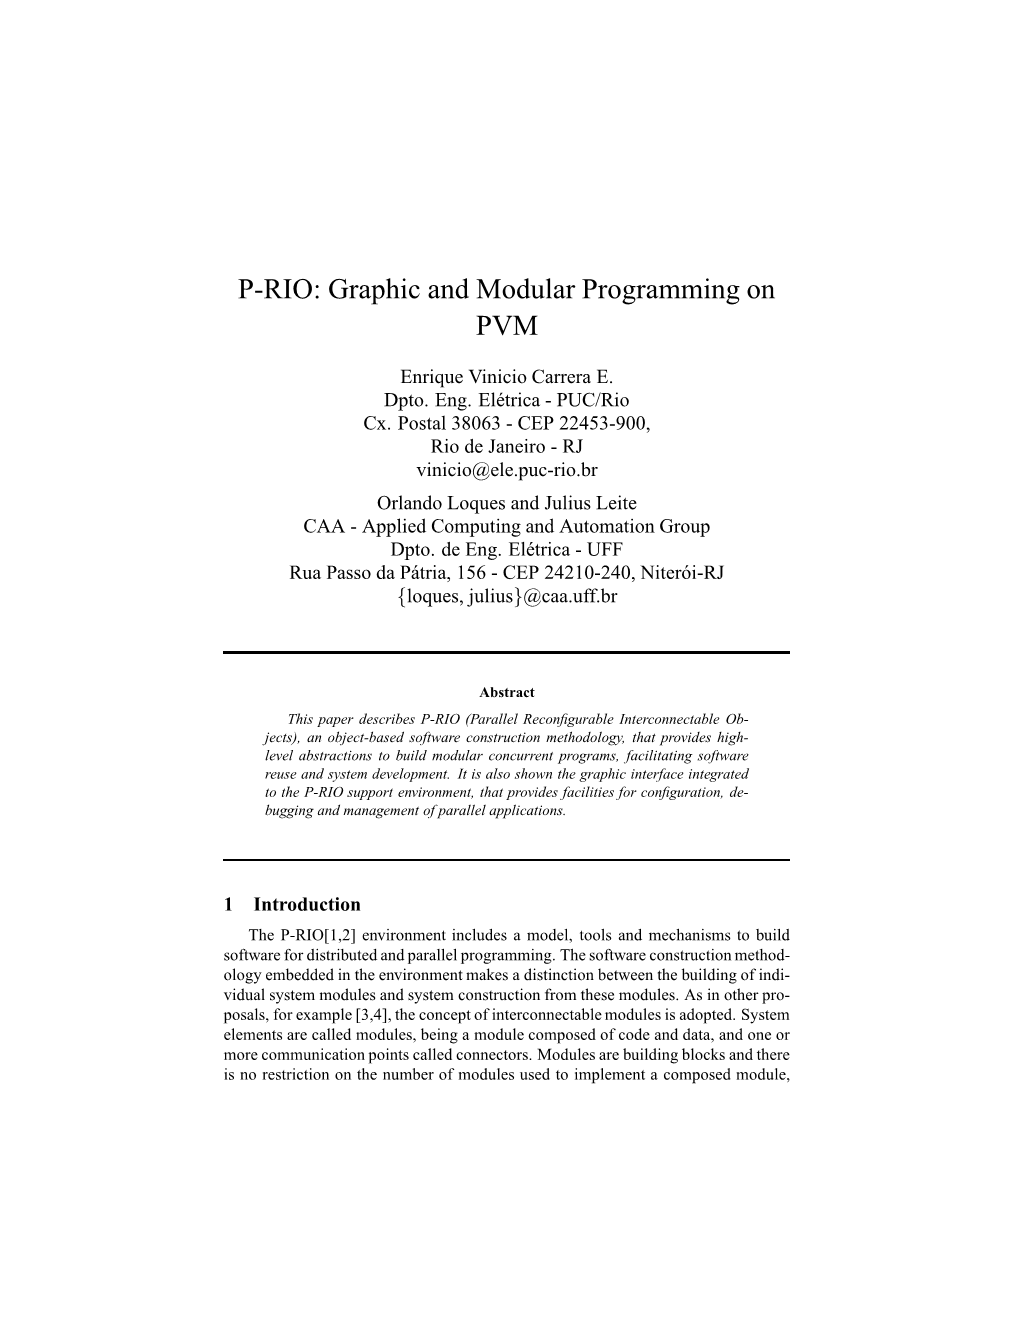 P-RIO: Graphic and Modular Programming on PVM